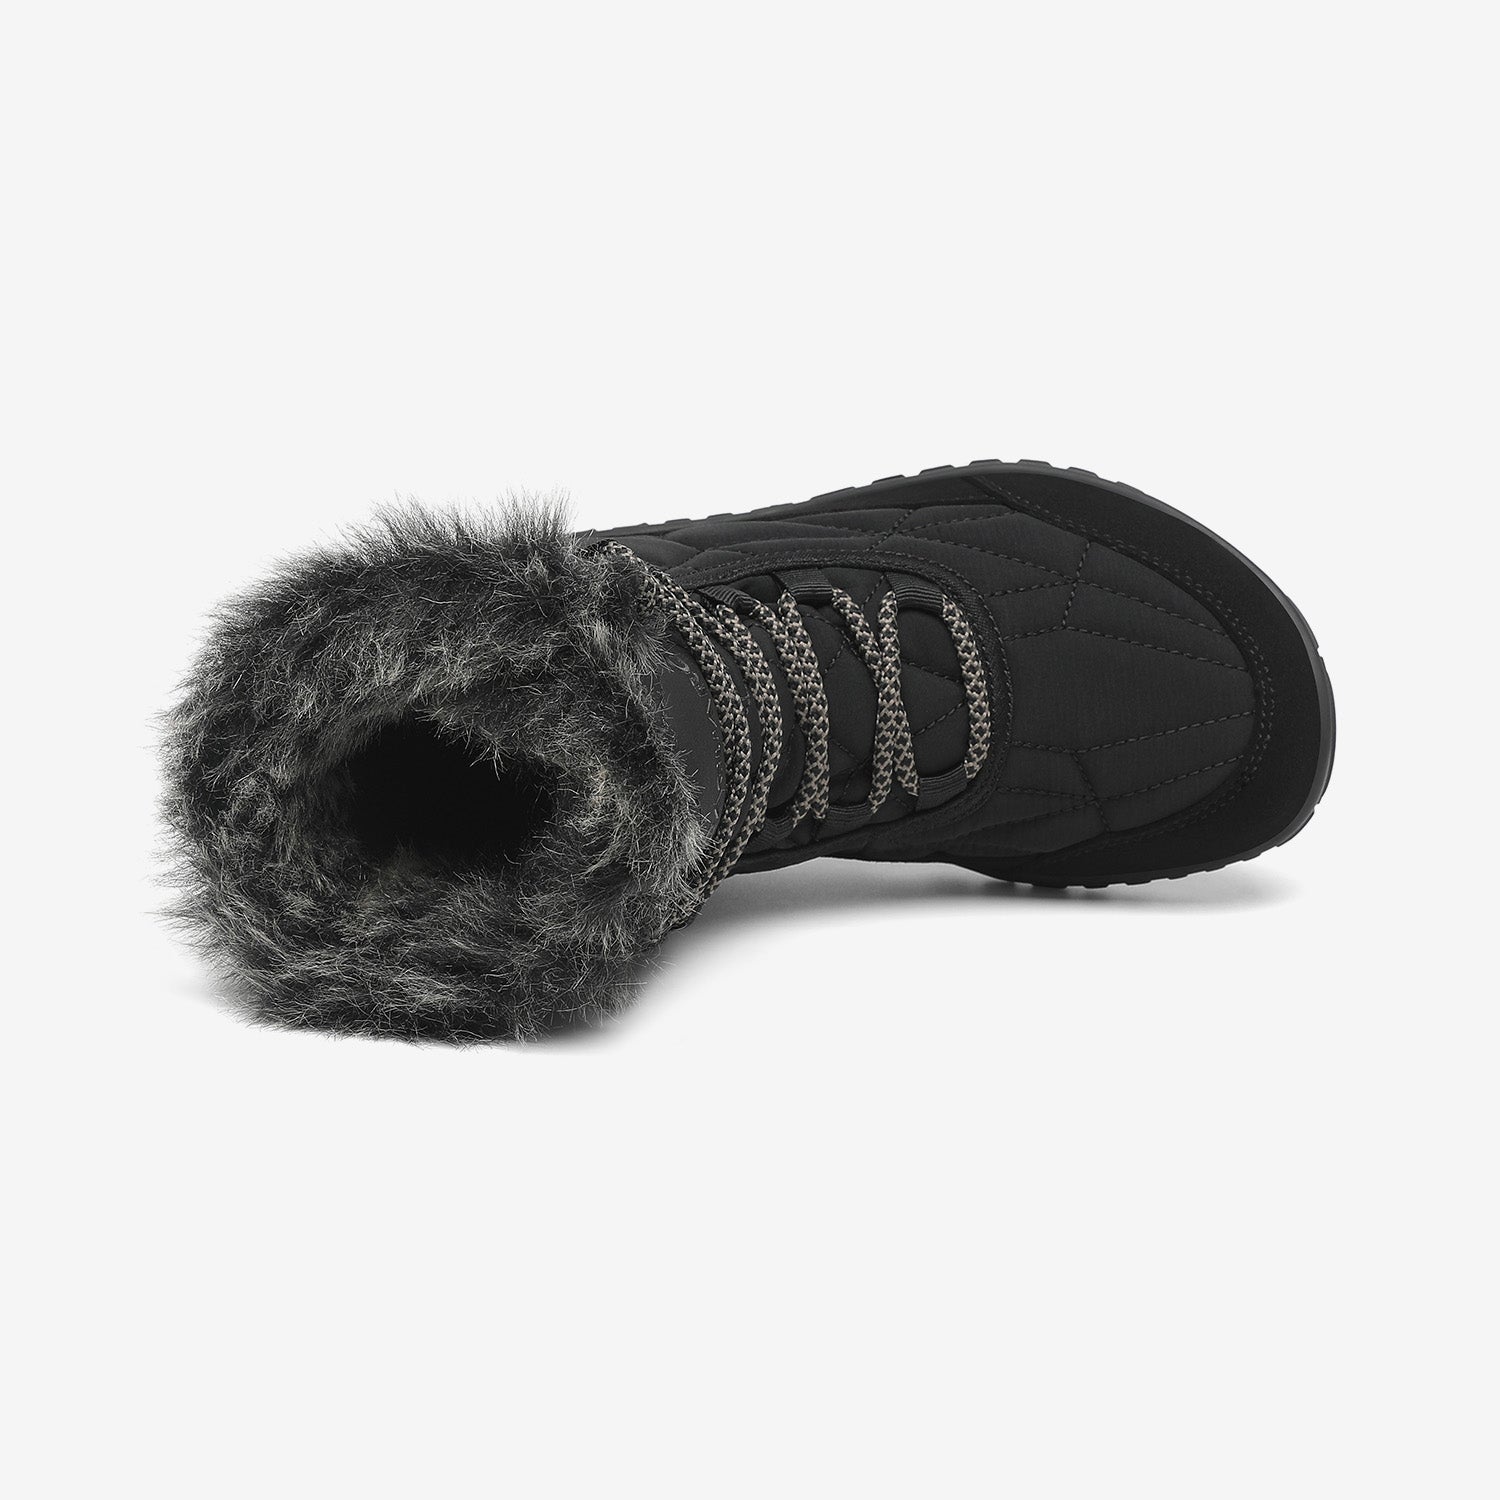 Rise II - Zapatos Barefoot de Invierno